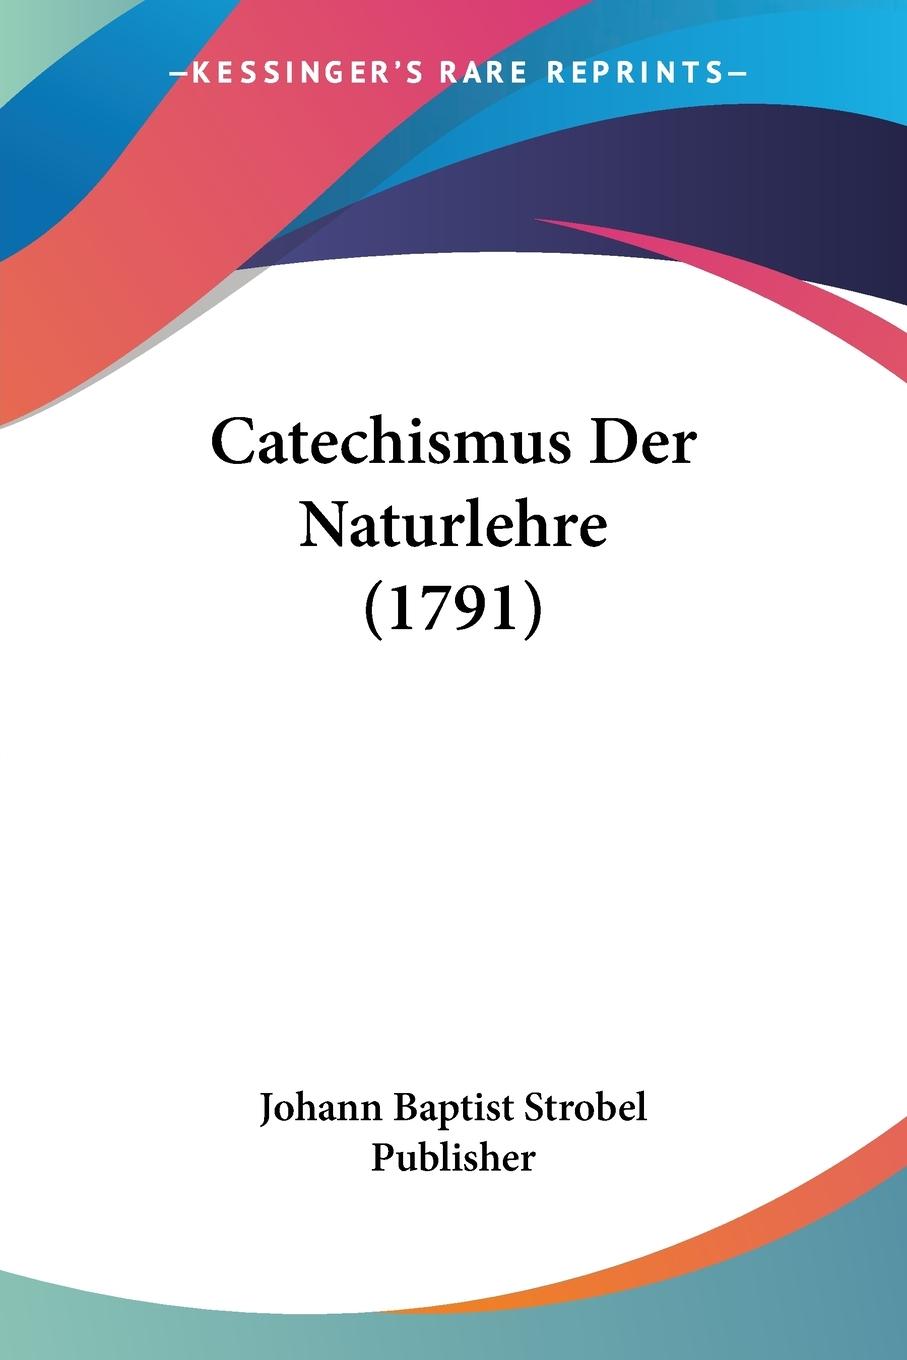 Catechismus Der Naturlehre (1791) - Johann Baptist Strobel Publisher